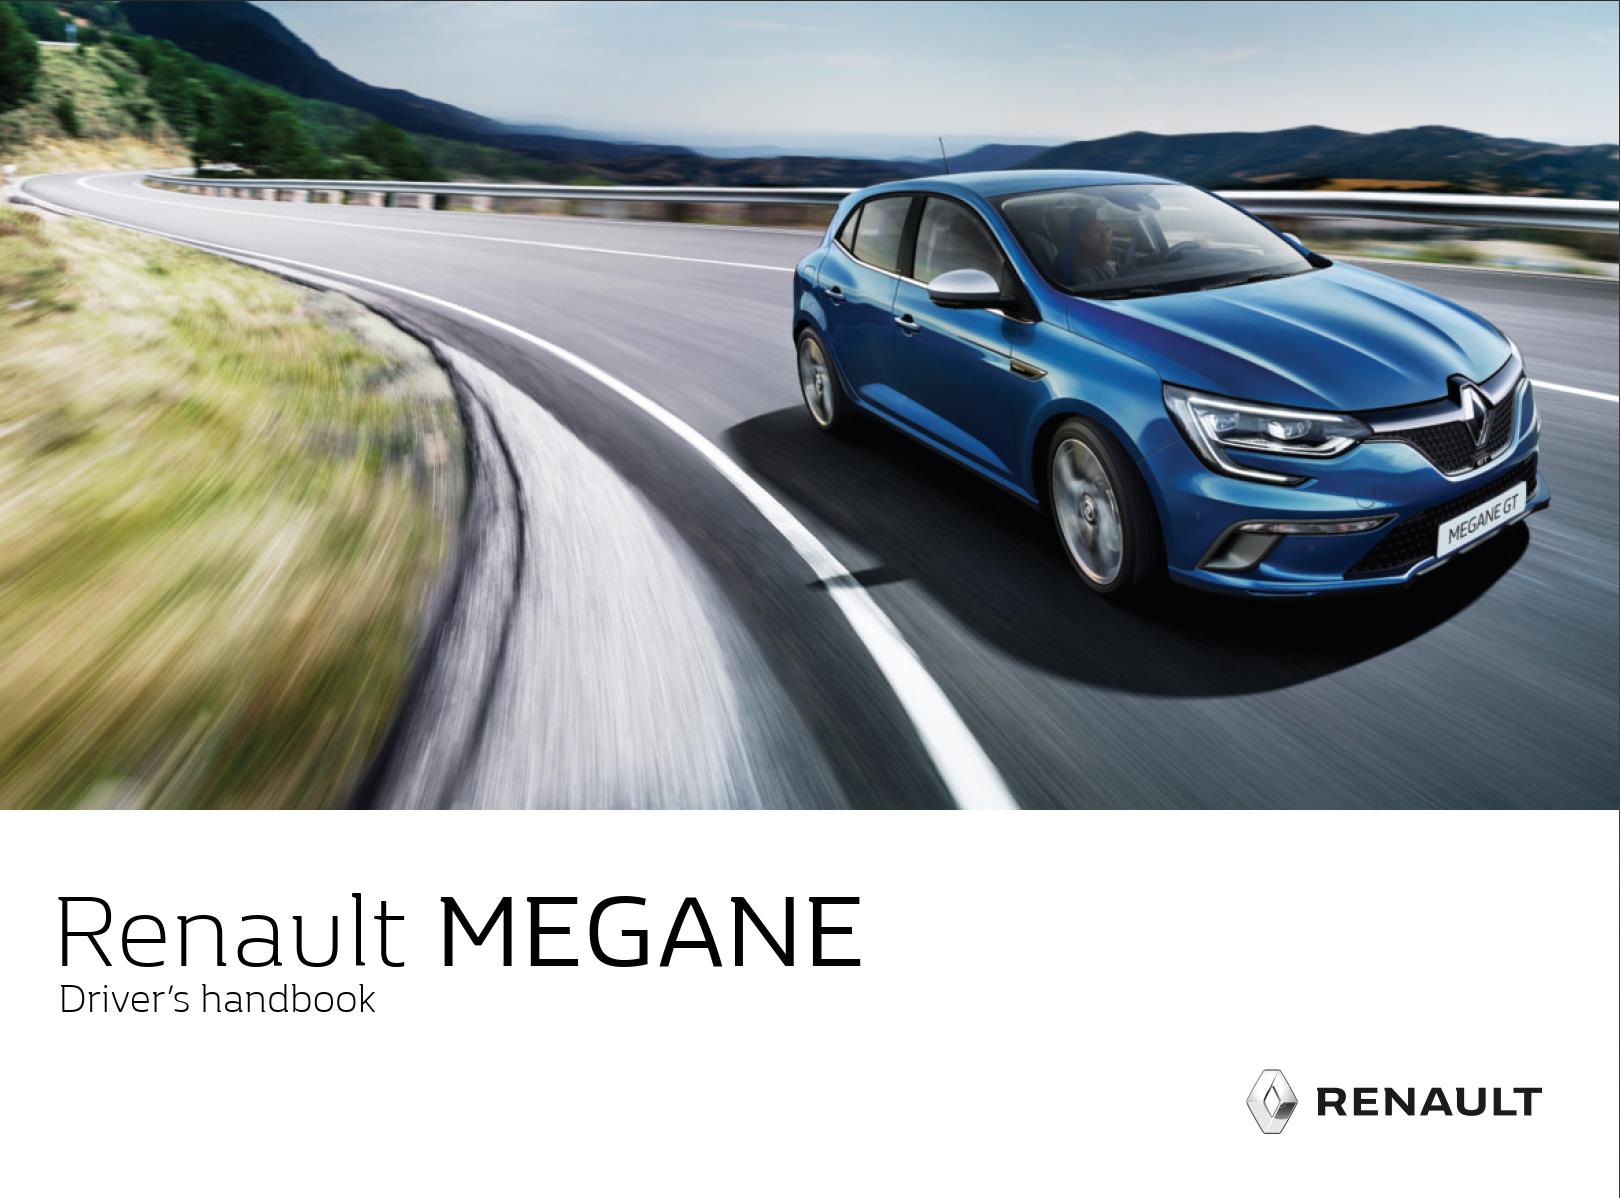 Renault Megane 2016 Owner's Manual PDF Download